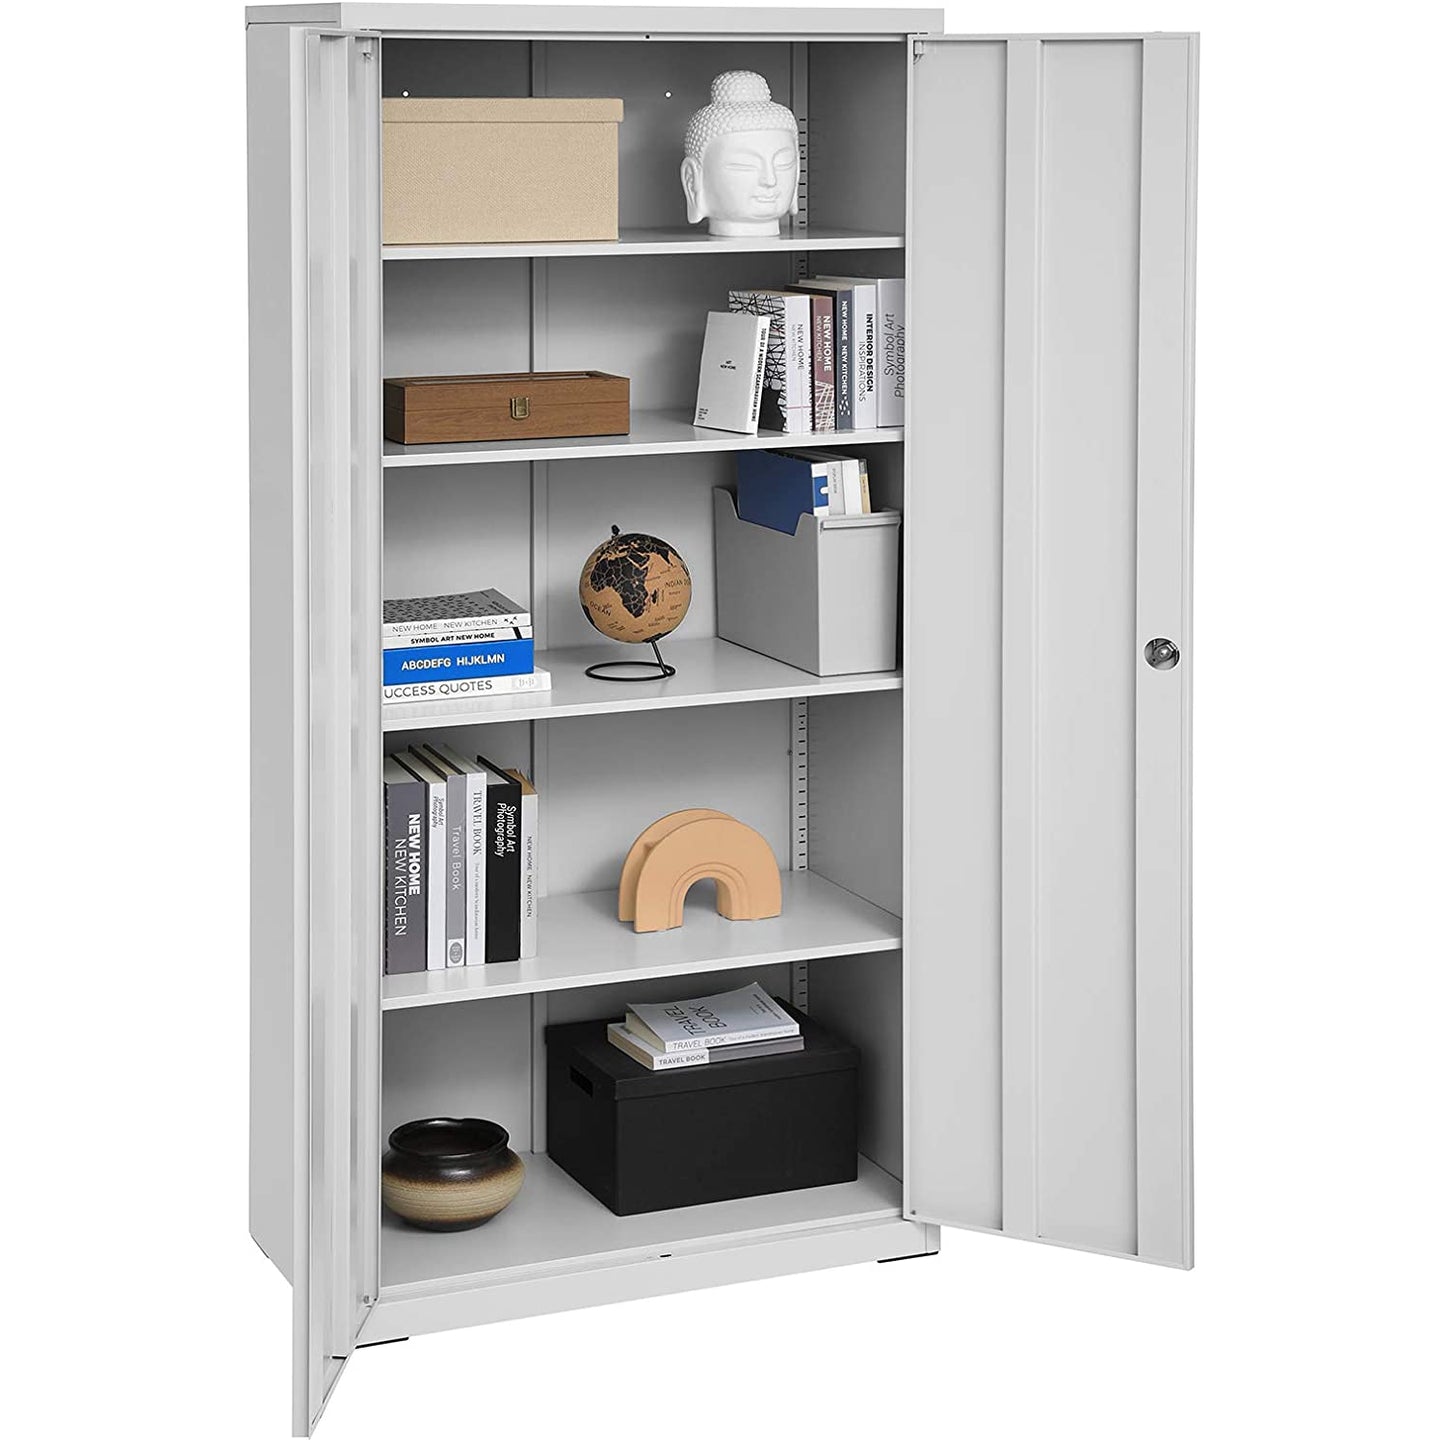 Nancy's Lenox Filing Cabinet - Office Cabinet - Storage Cabinet - 5 Shelves - Steel - Gray